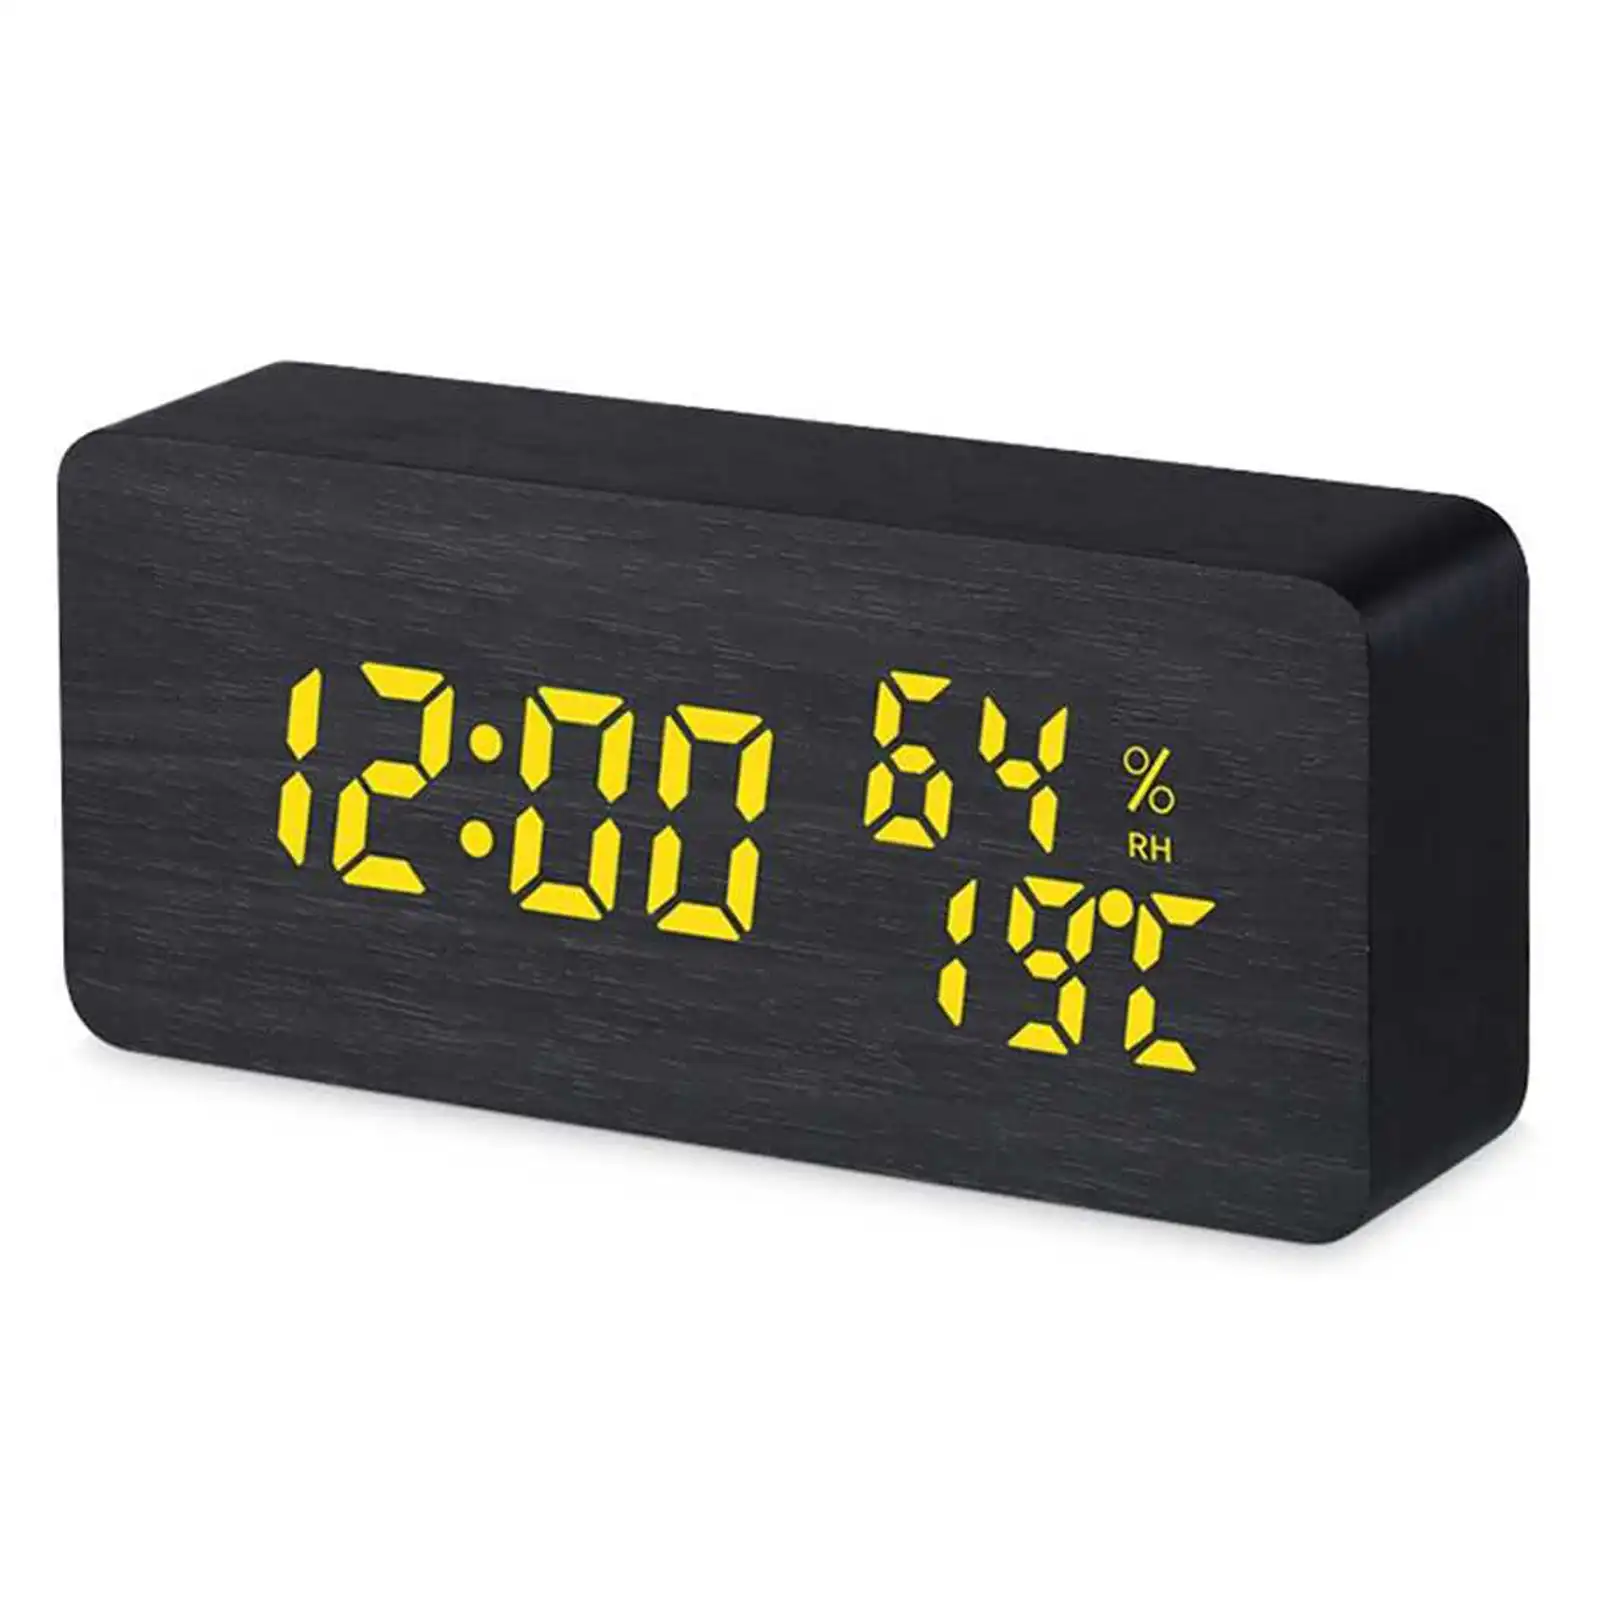 TODO LED Digital Alarm Clock Woodgrain Temperature Humidity USB Power - Black